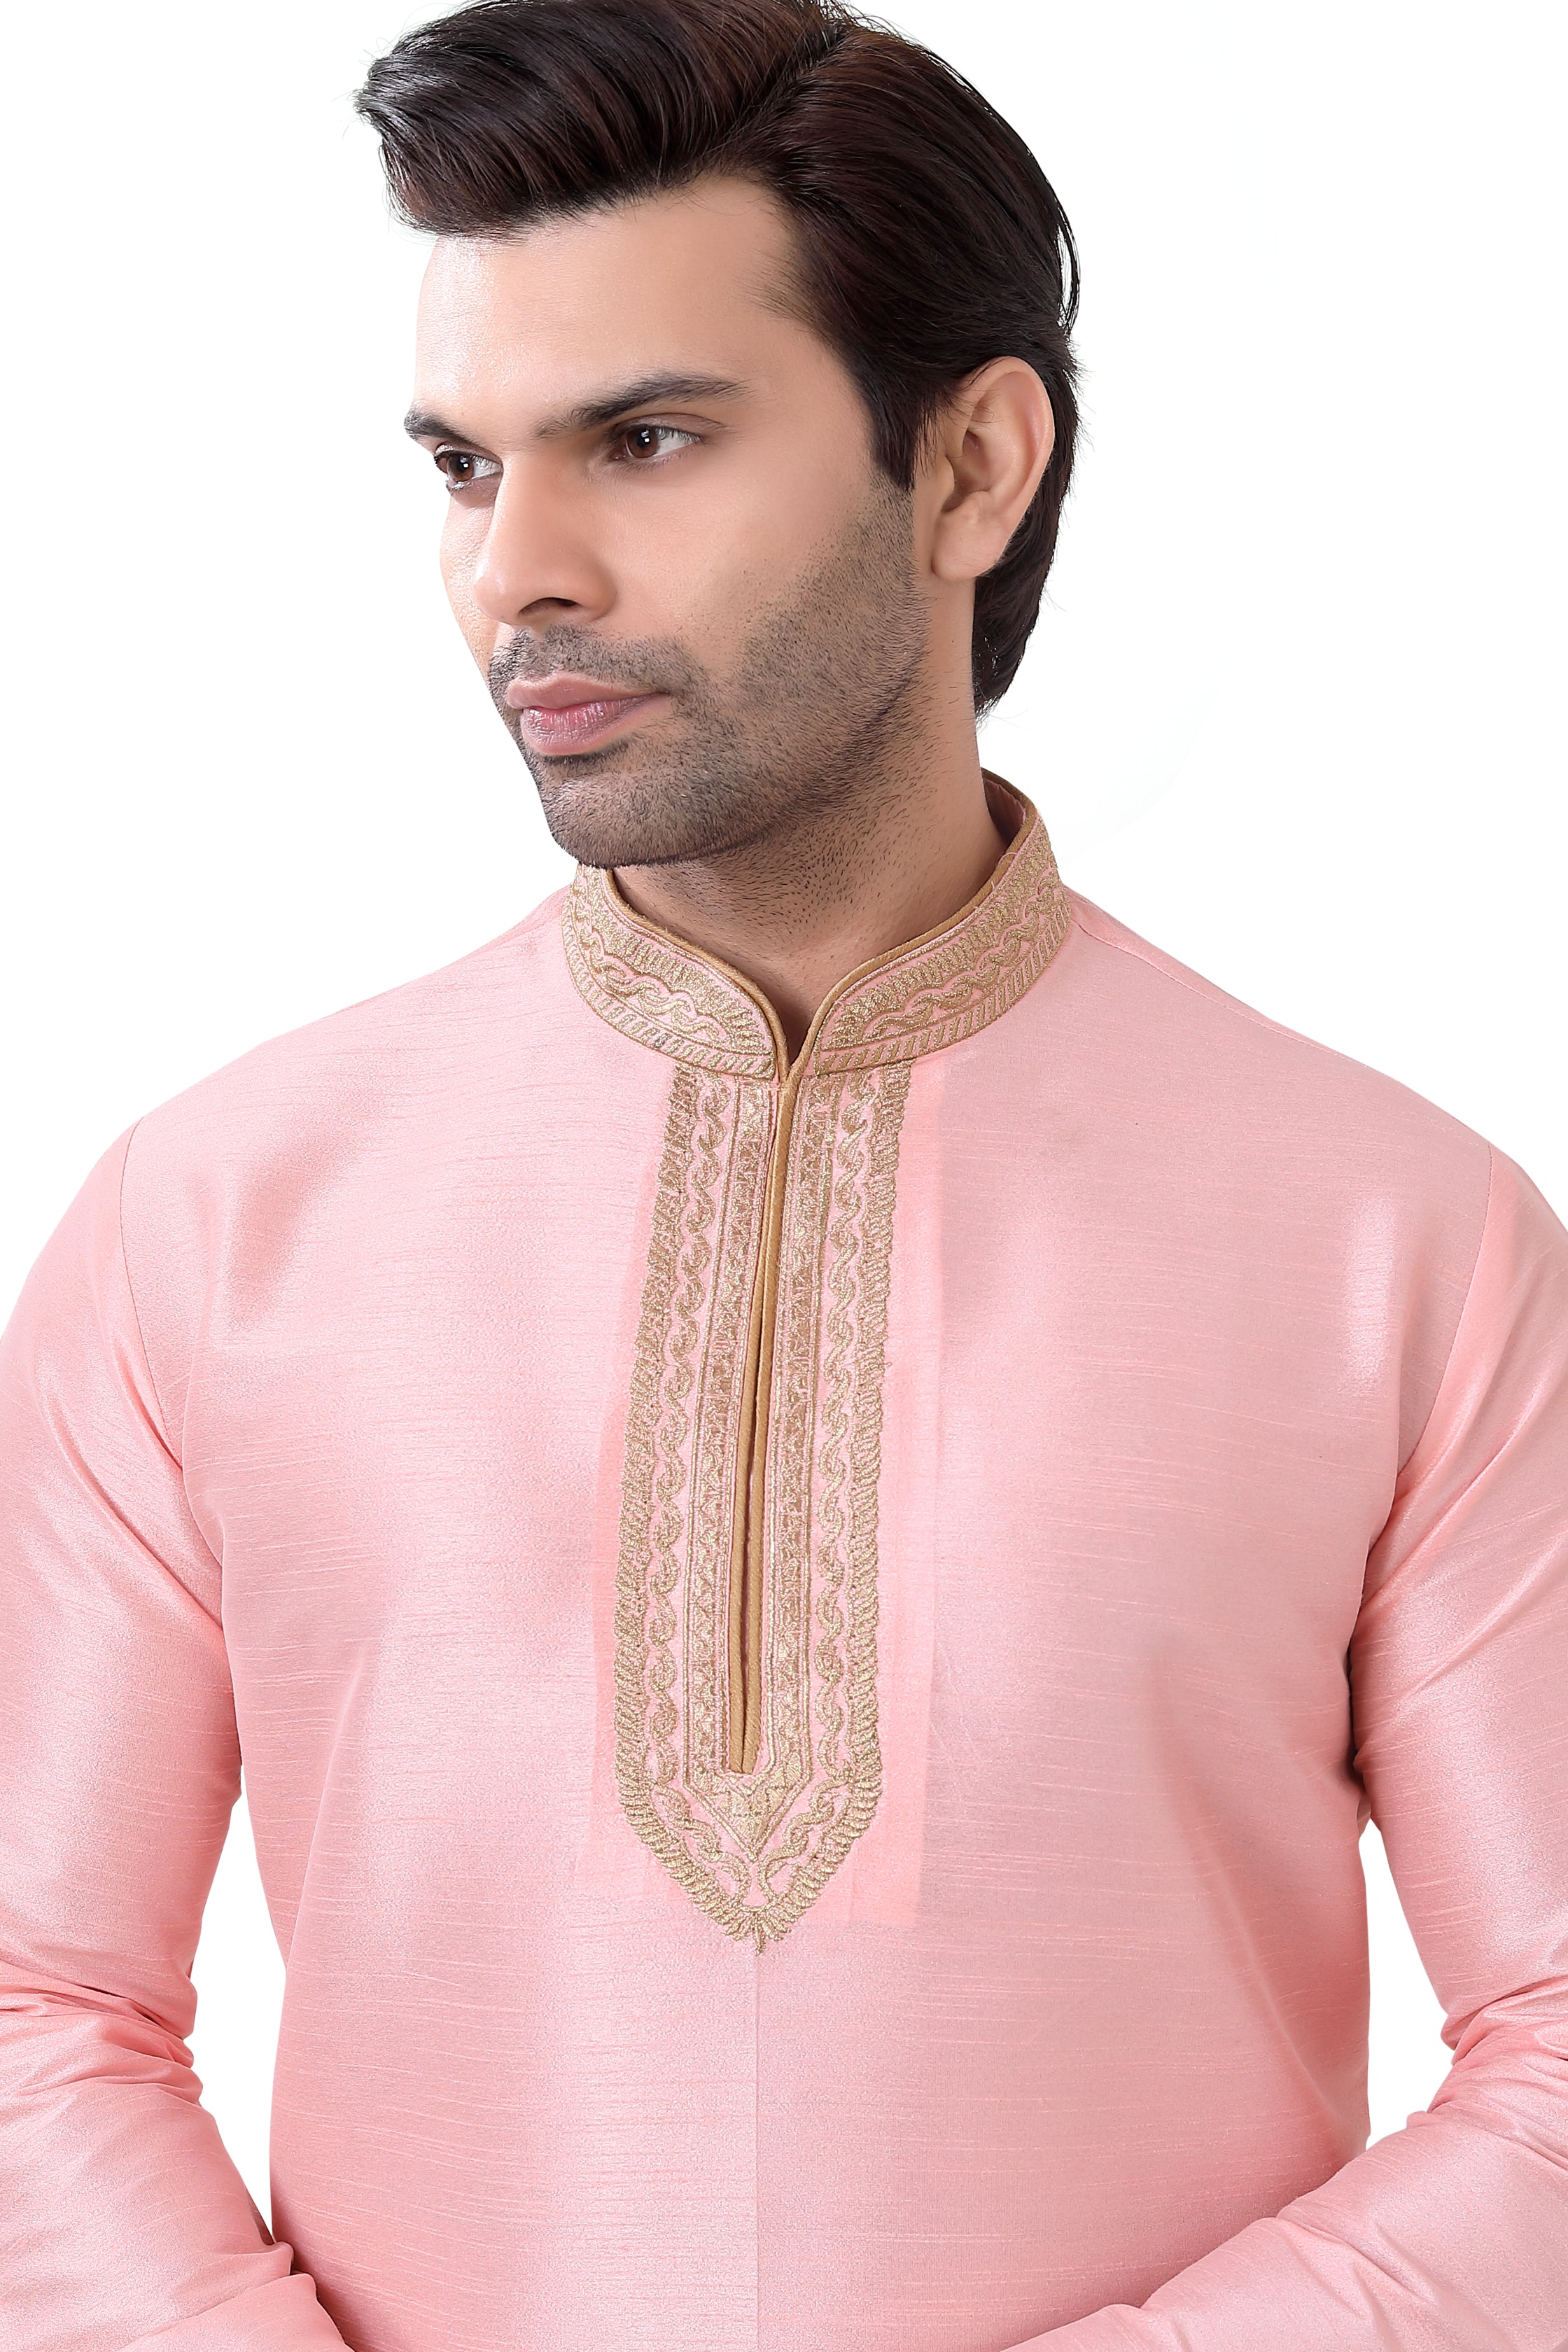 Banarasi Dupion Silk Short Kurta with embroidery in Light Pink color - Premium kurta pajama from Dapper Ethnic - Just $49! Shop now at Dulhan Exclusives